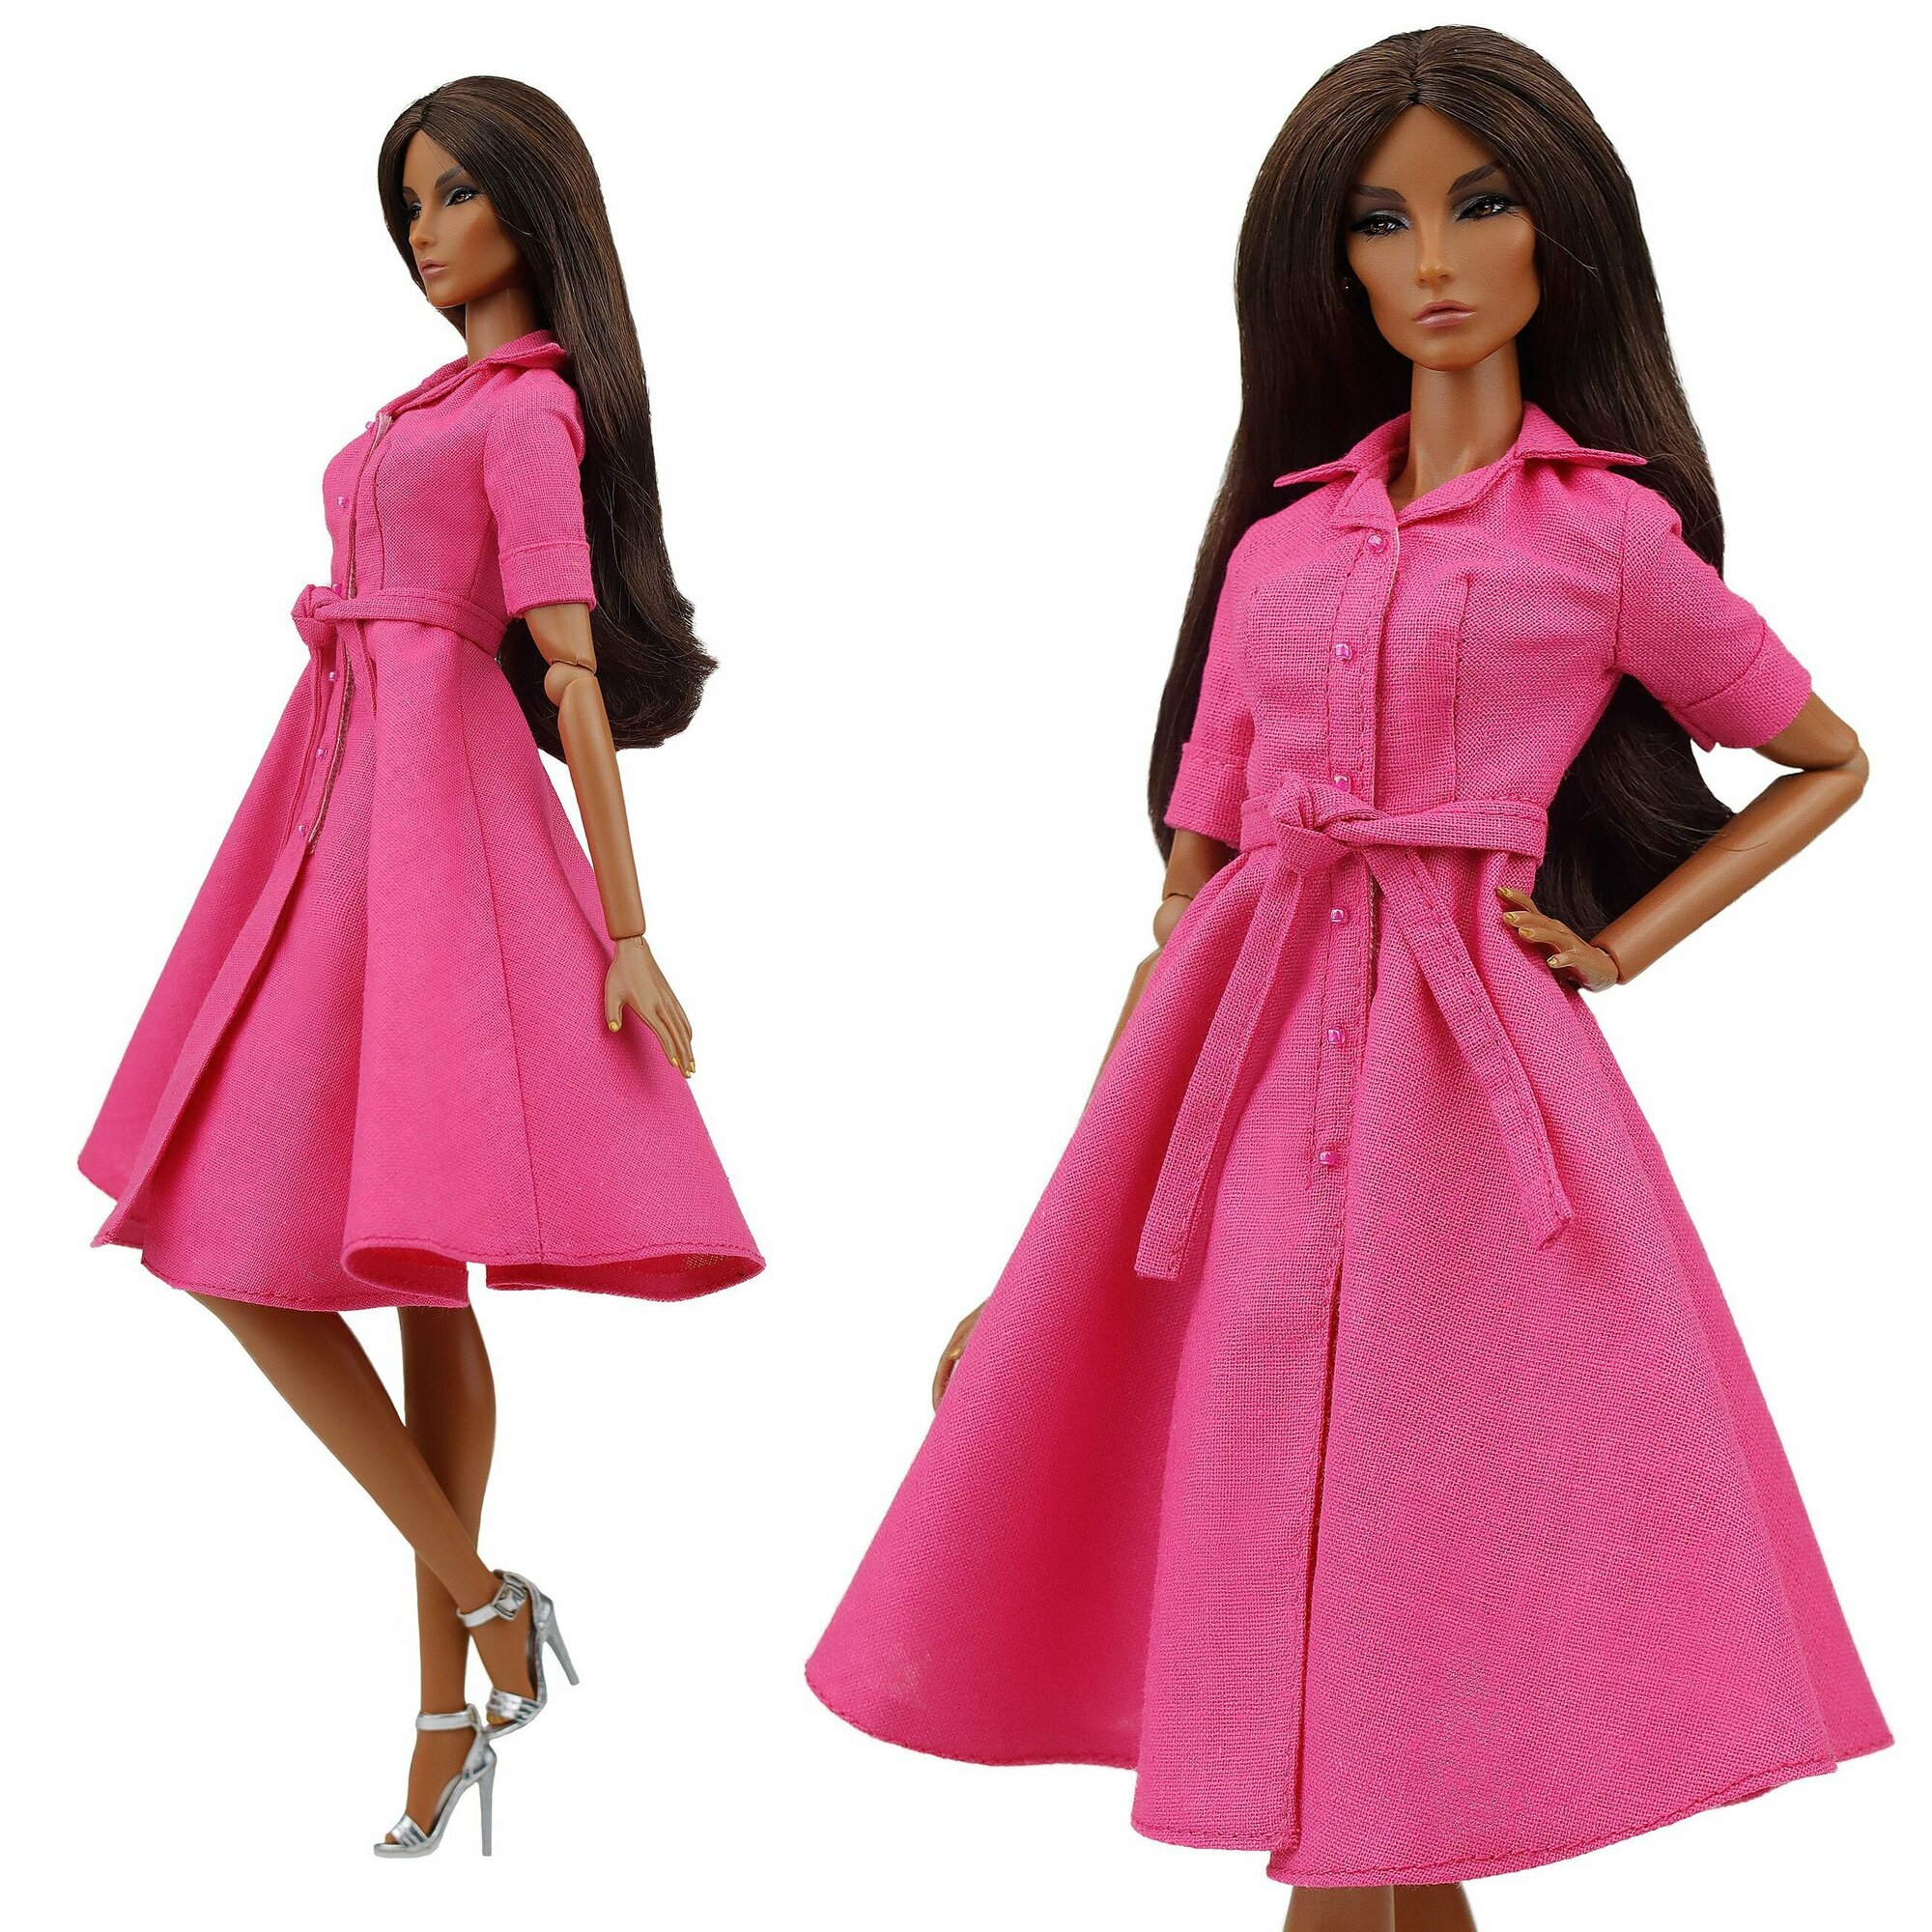 Платье-рубашка цвета "Фуксия" для кукол 29 см. типа барби